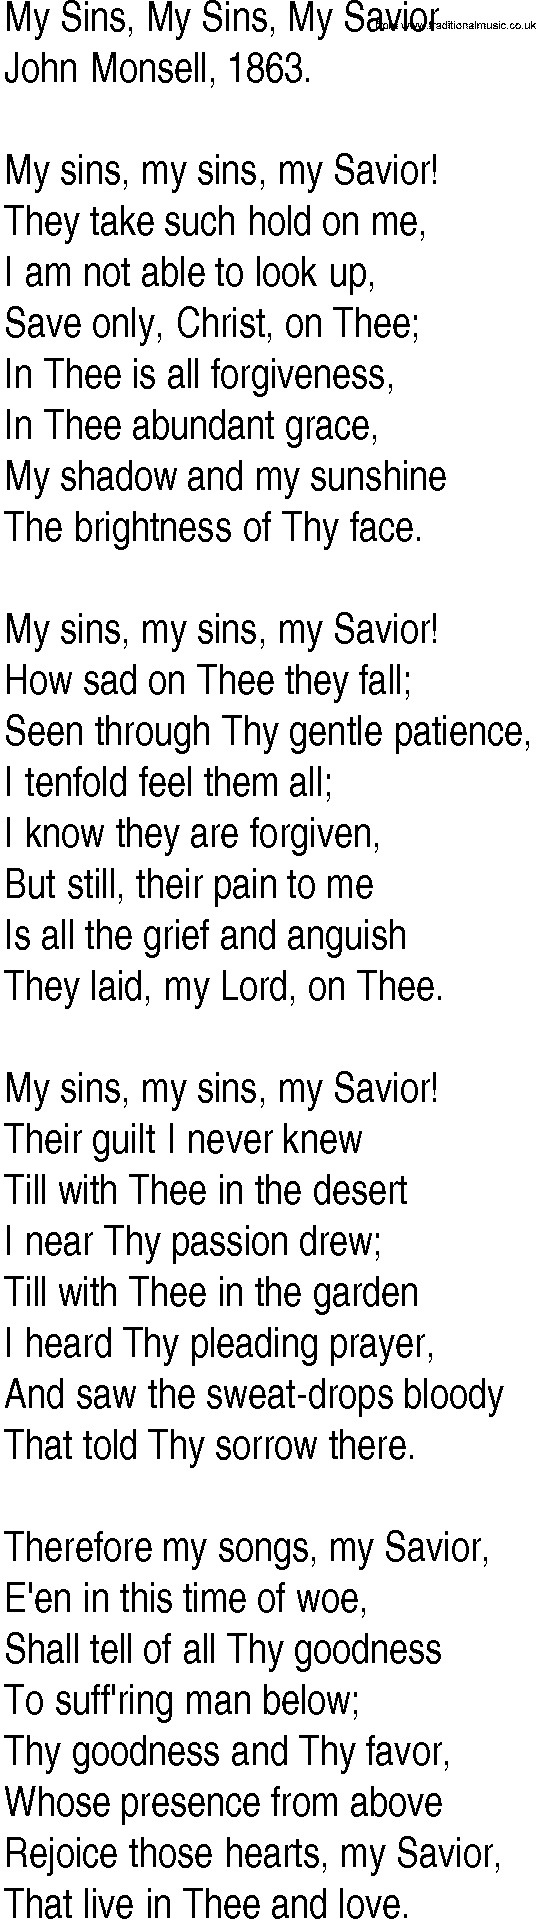 Hymn and Gospel Song: My Sins, My Sins, My Savior by John Monsell lyrics